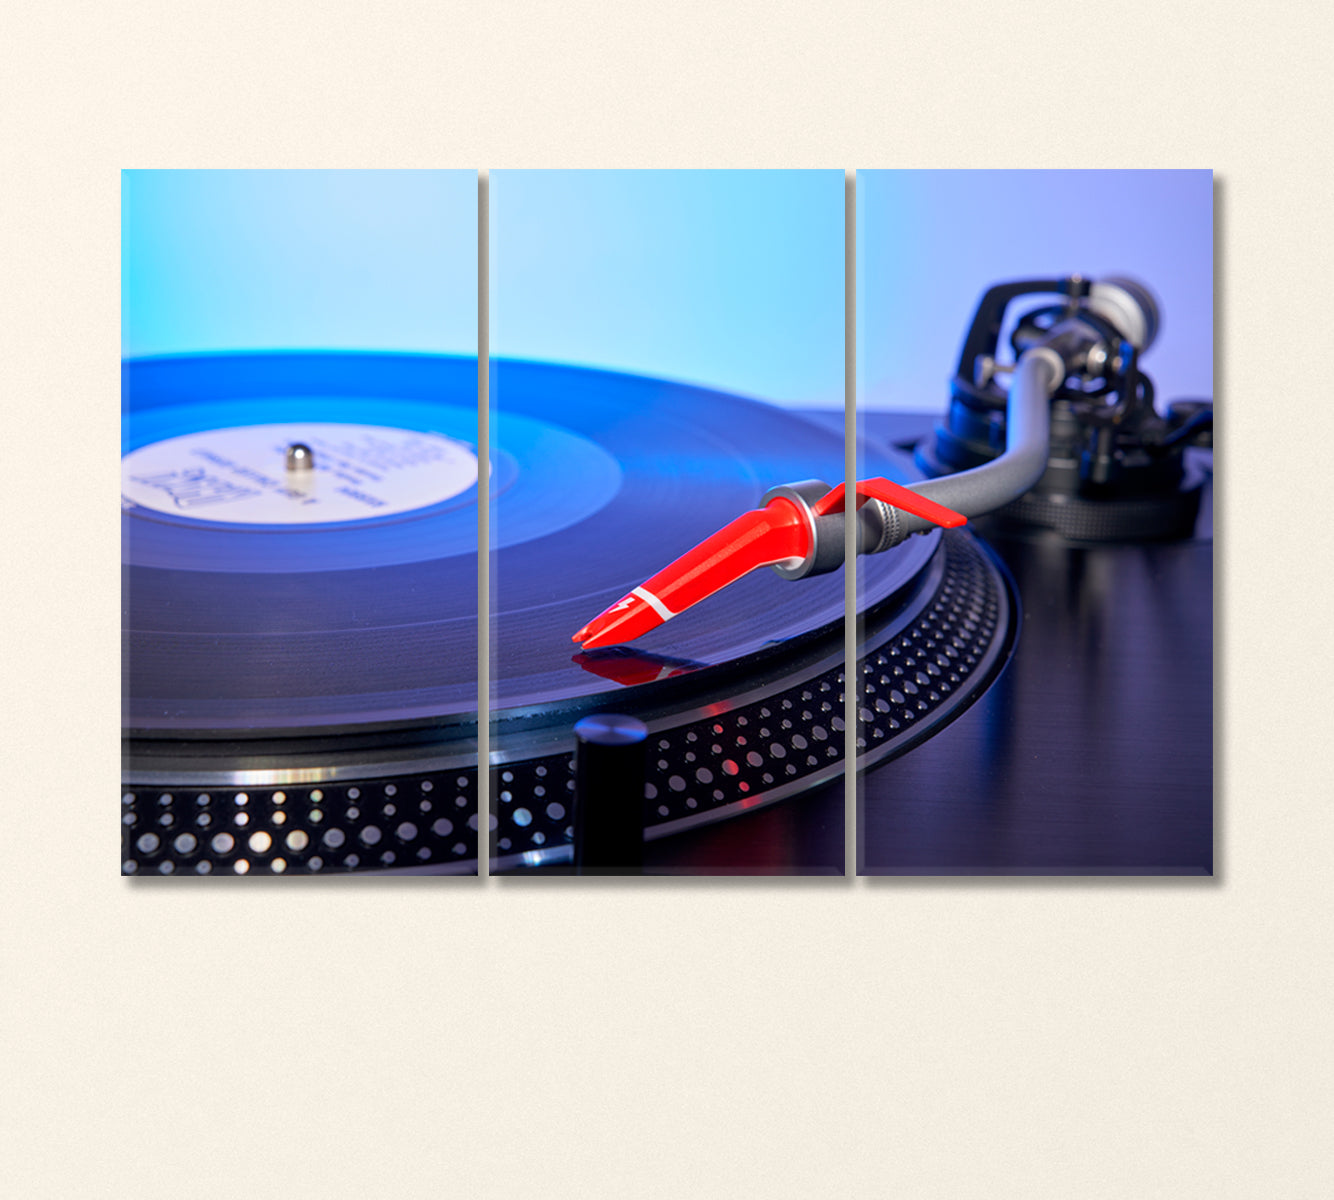 Vinyl Record Player Canvas Print-Canvas Print-CetArt-3 Panels-36x24 inches-CetArt